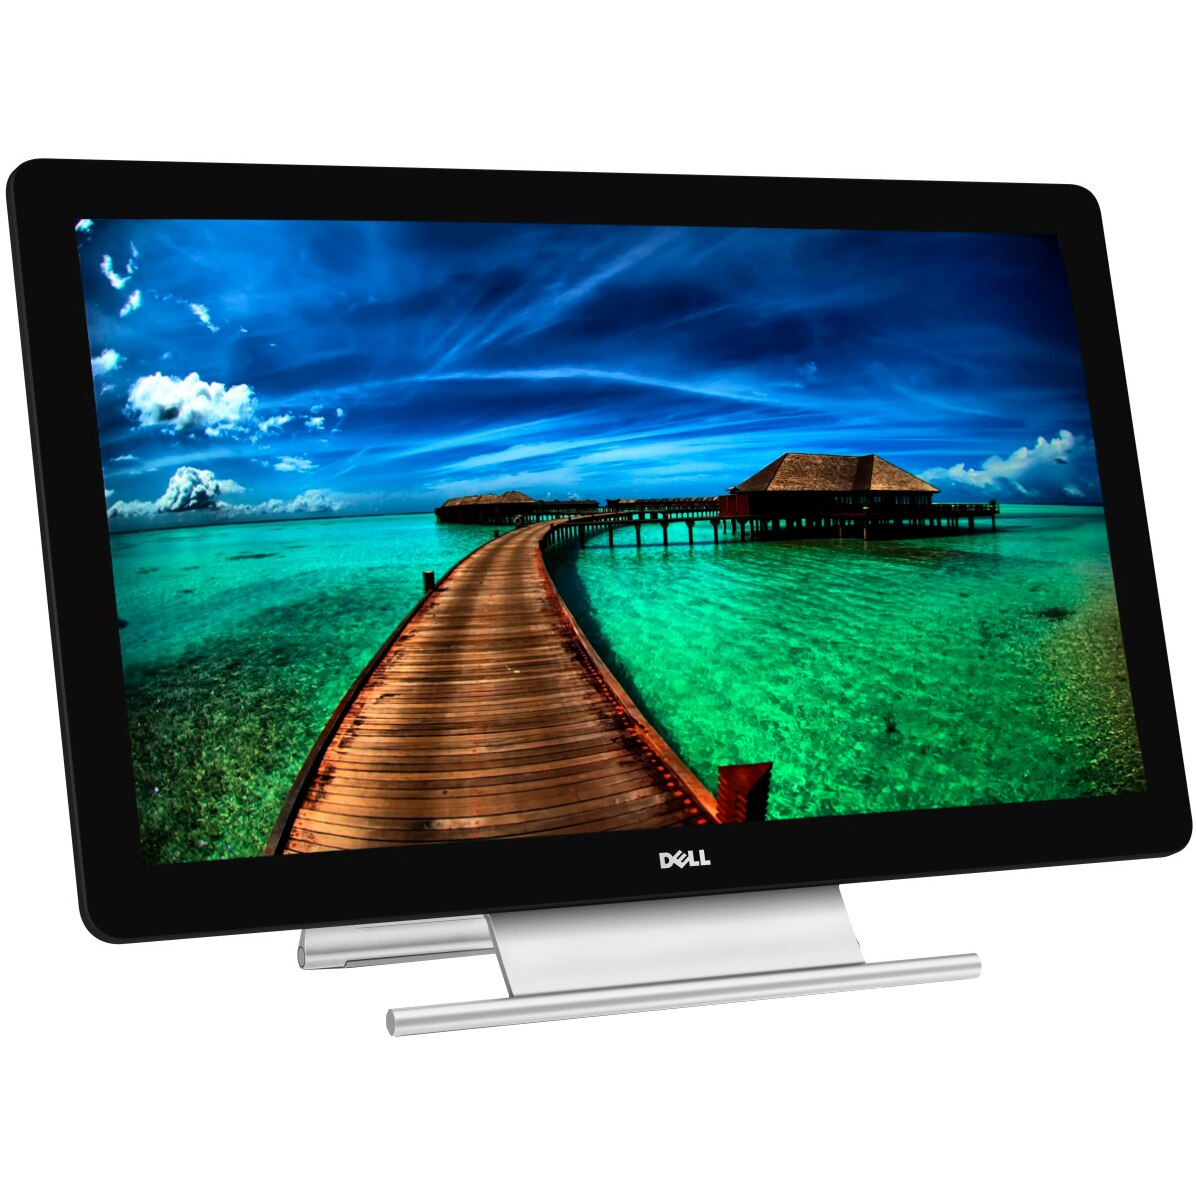 Dell P2714T  27 inch LED TouchScreen  1920x1080 Full HD  16:9  HDMI  displayport  black  monitor refurbished